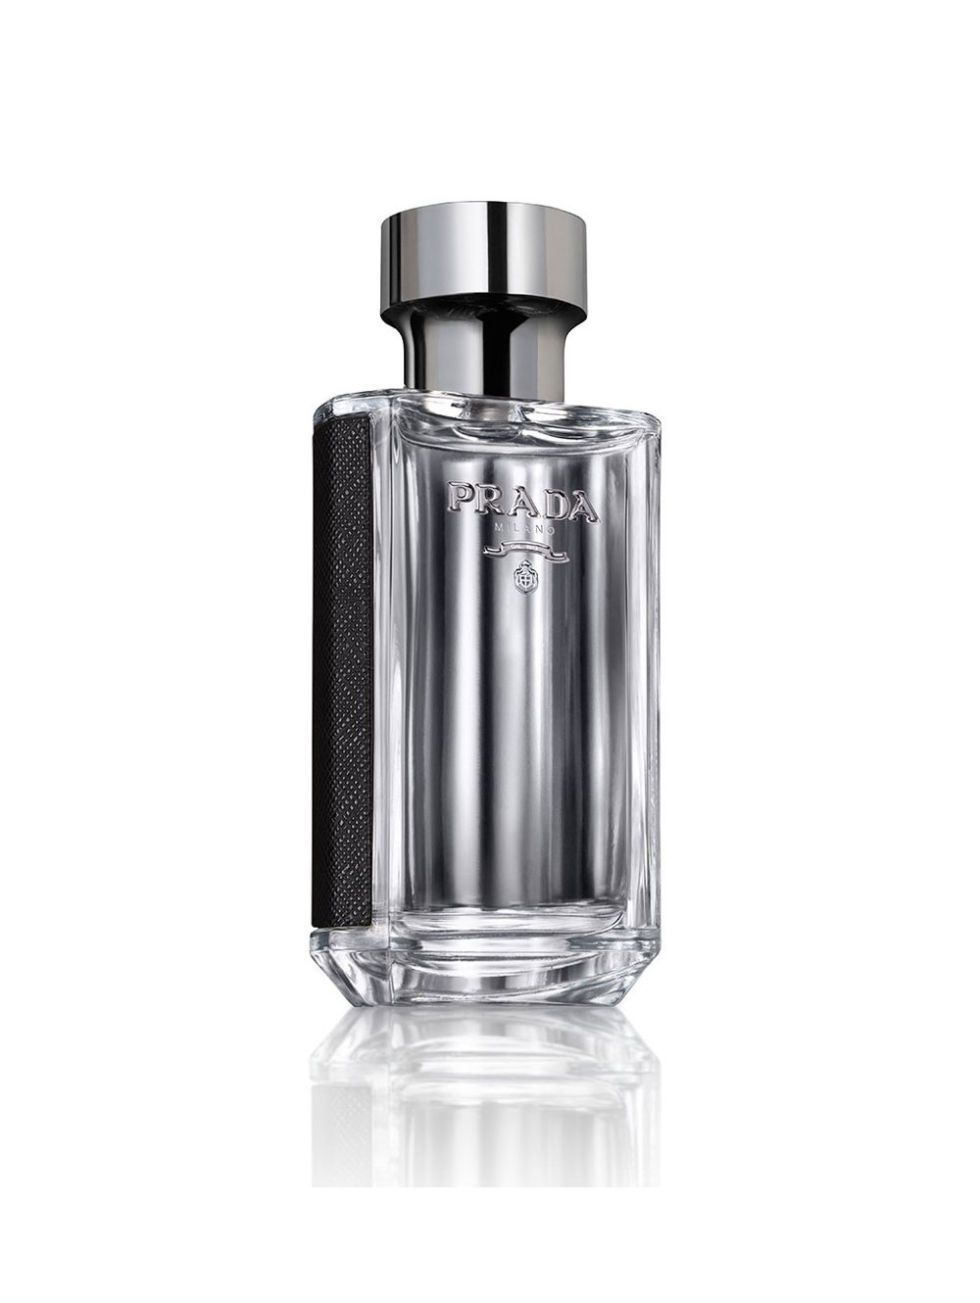 Liquid, Fluid, Product, Bottle, Perfume, Style, Glass bottle, Cosmetics, Grey, Transparent material, 